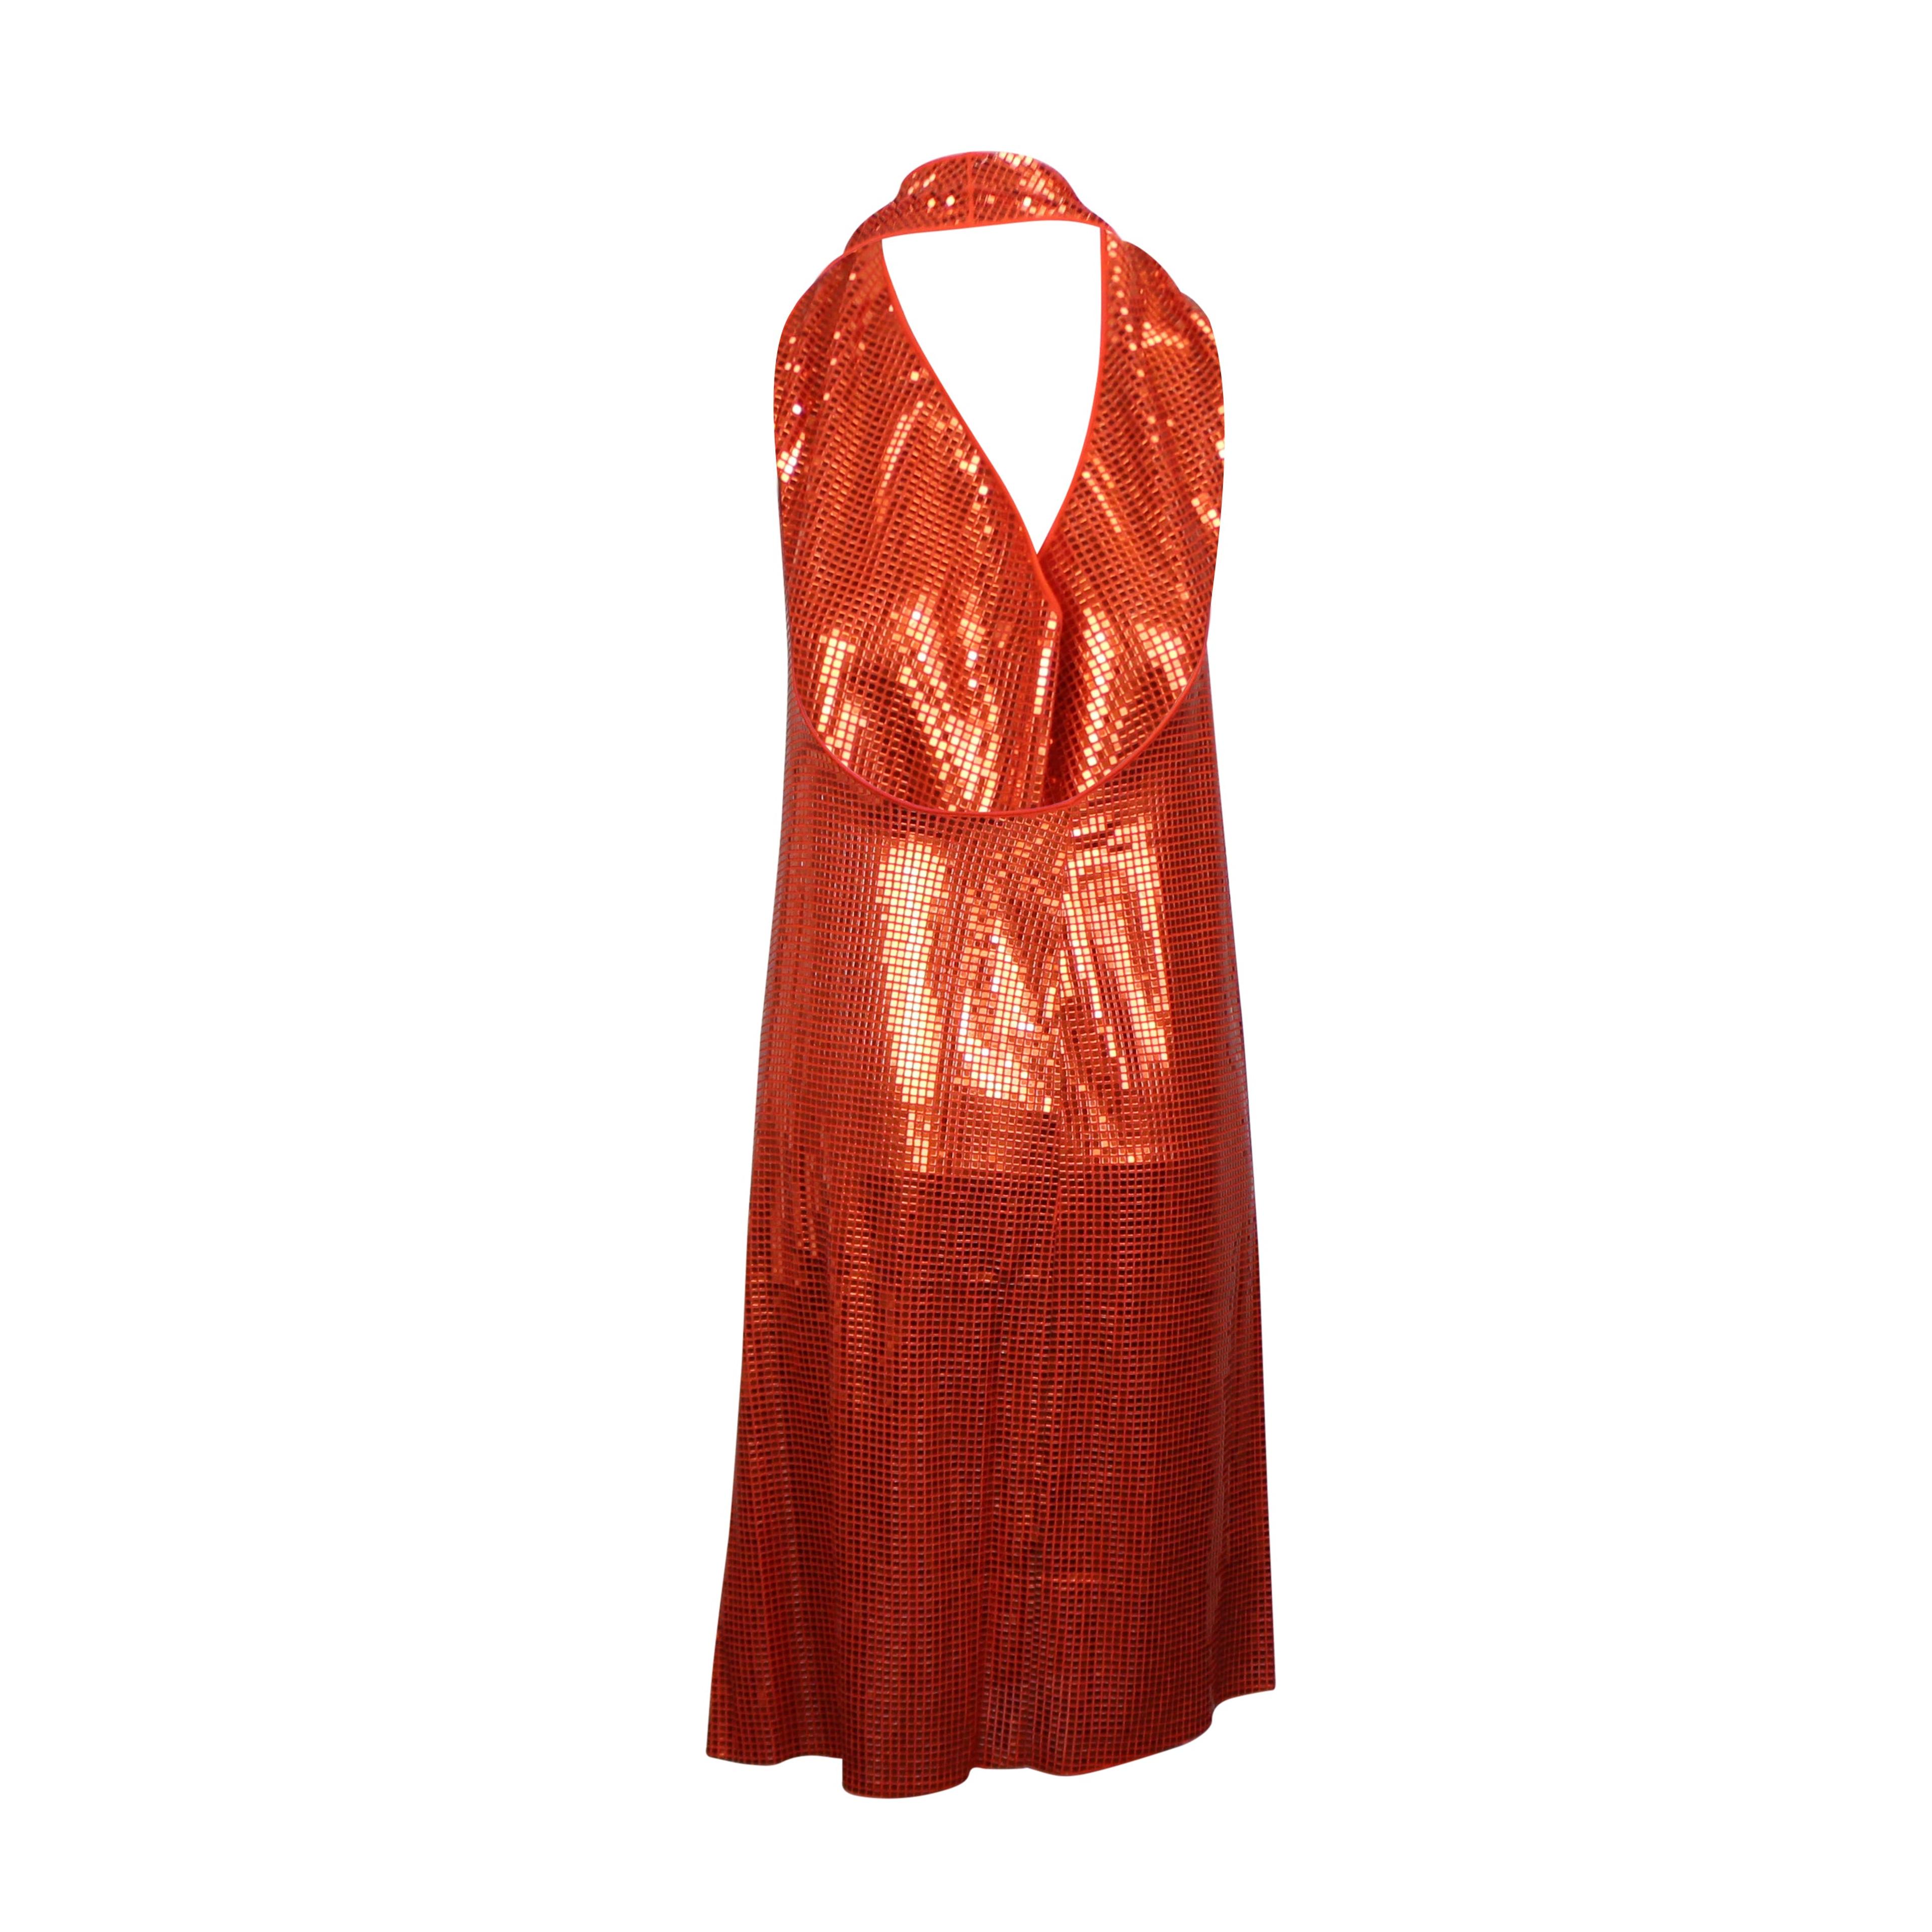 Alternate View 3 of Orange Drape Halter Sequin Mid Dress